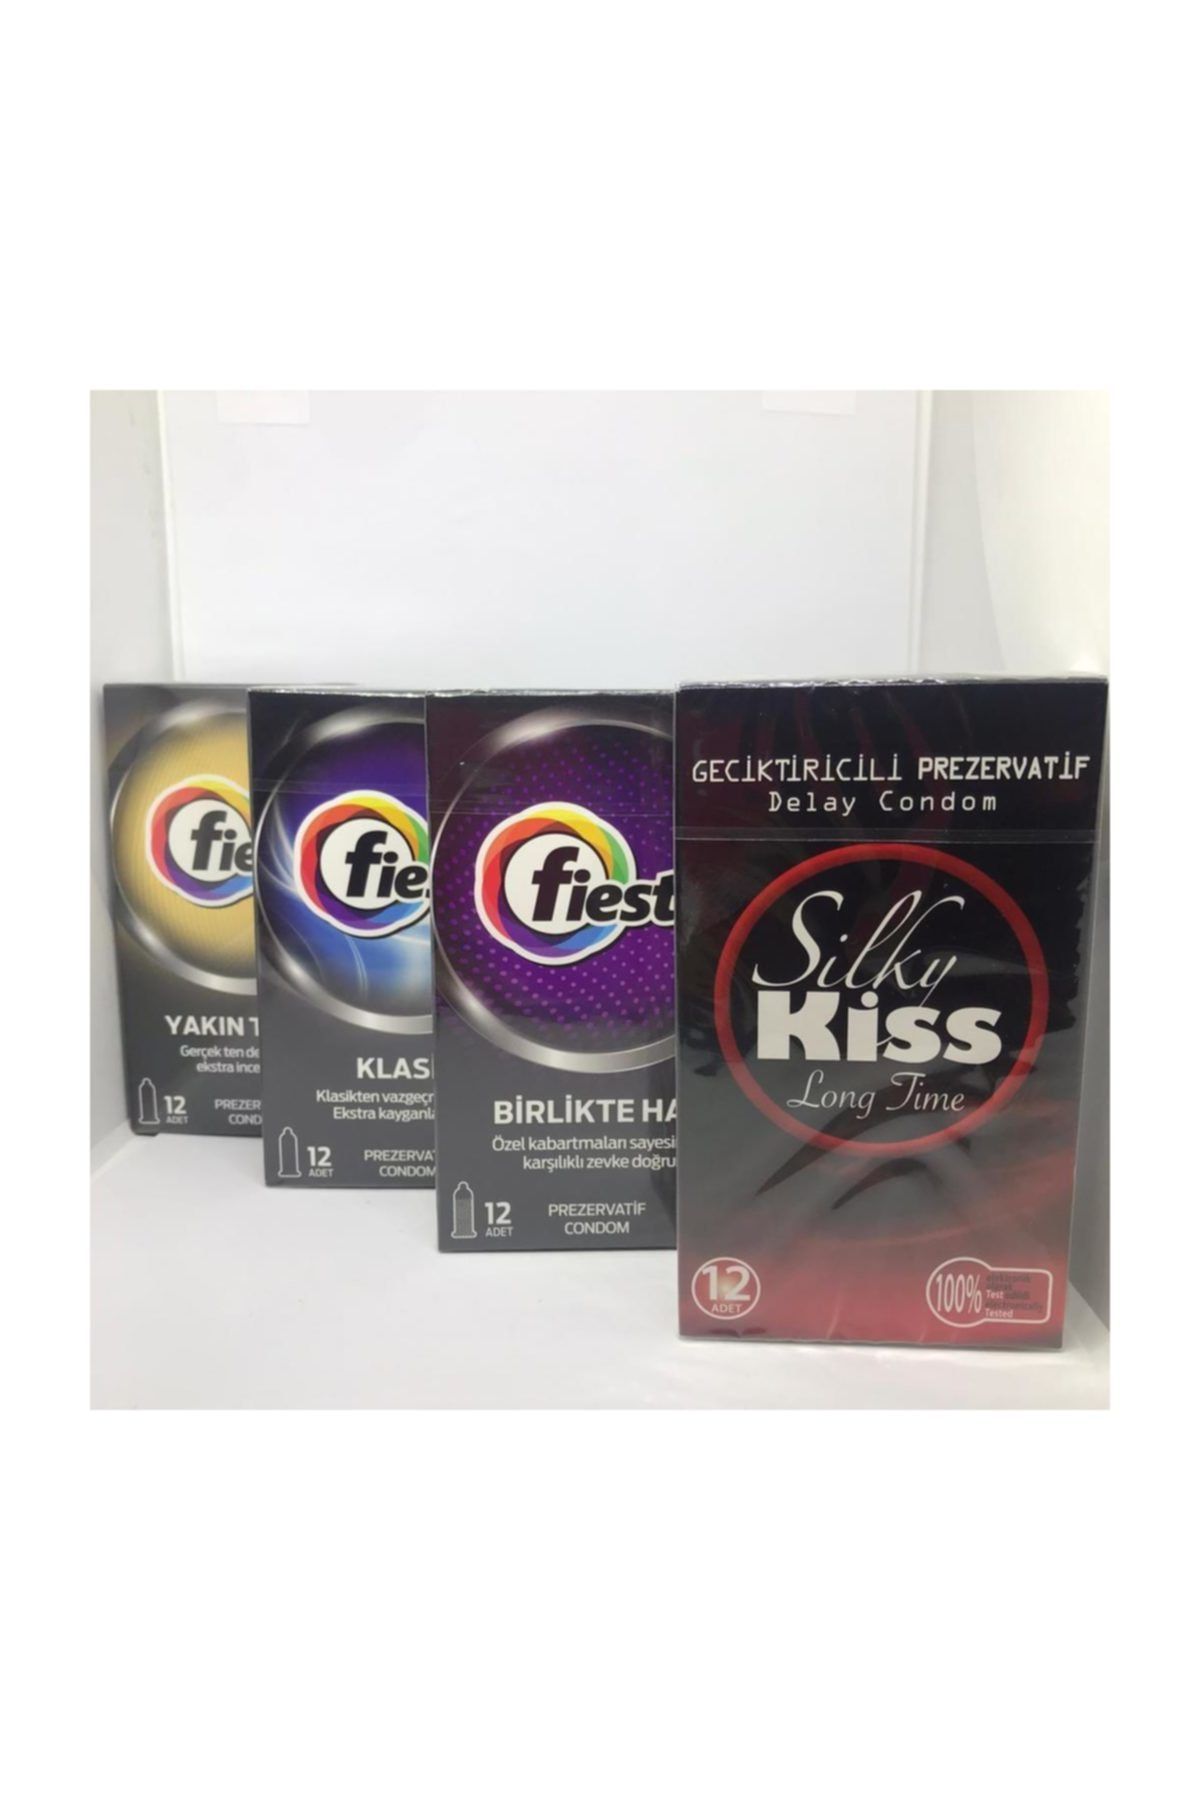 Fiesta - Silky Kiss Süper Karışık 48 Adet Prezervatif Seti